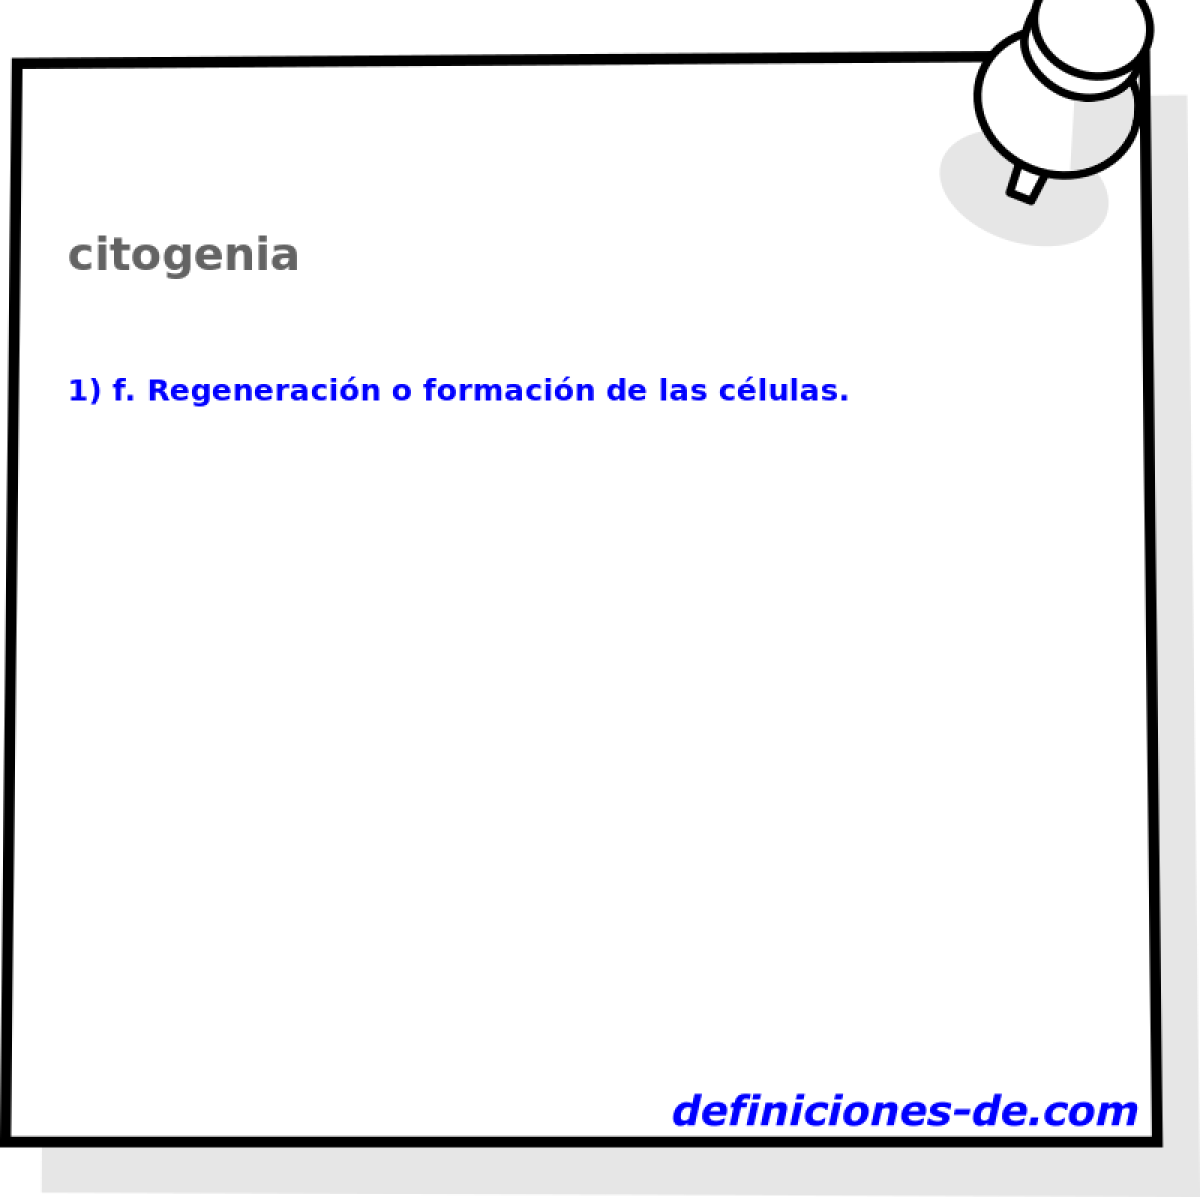 citogenia 